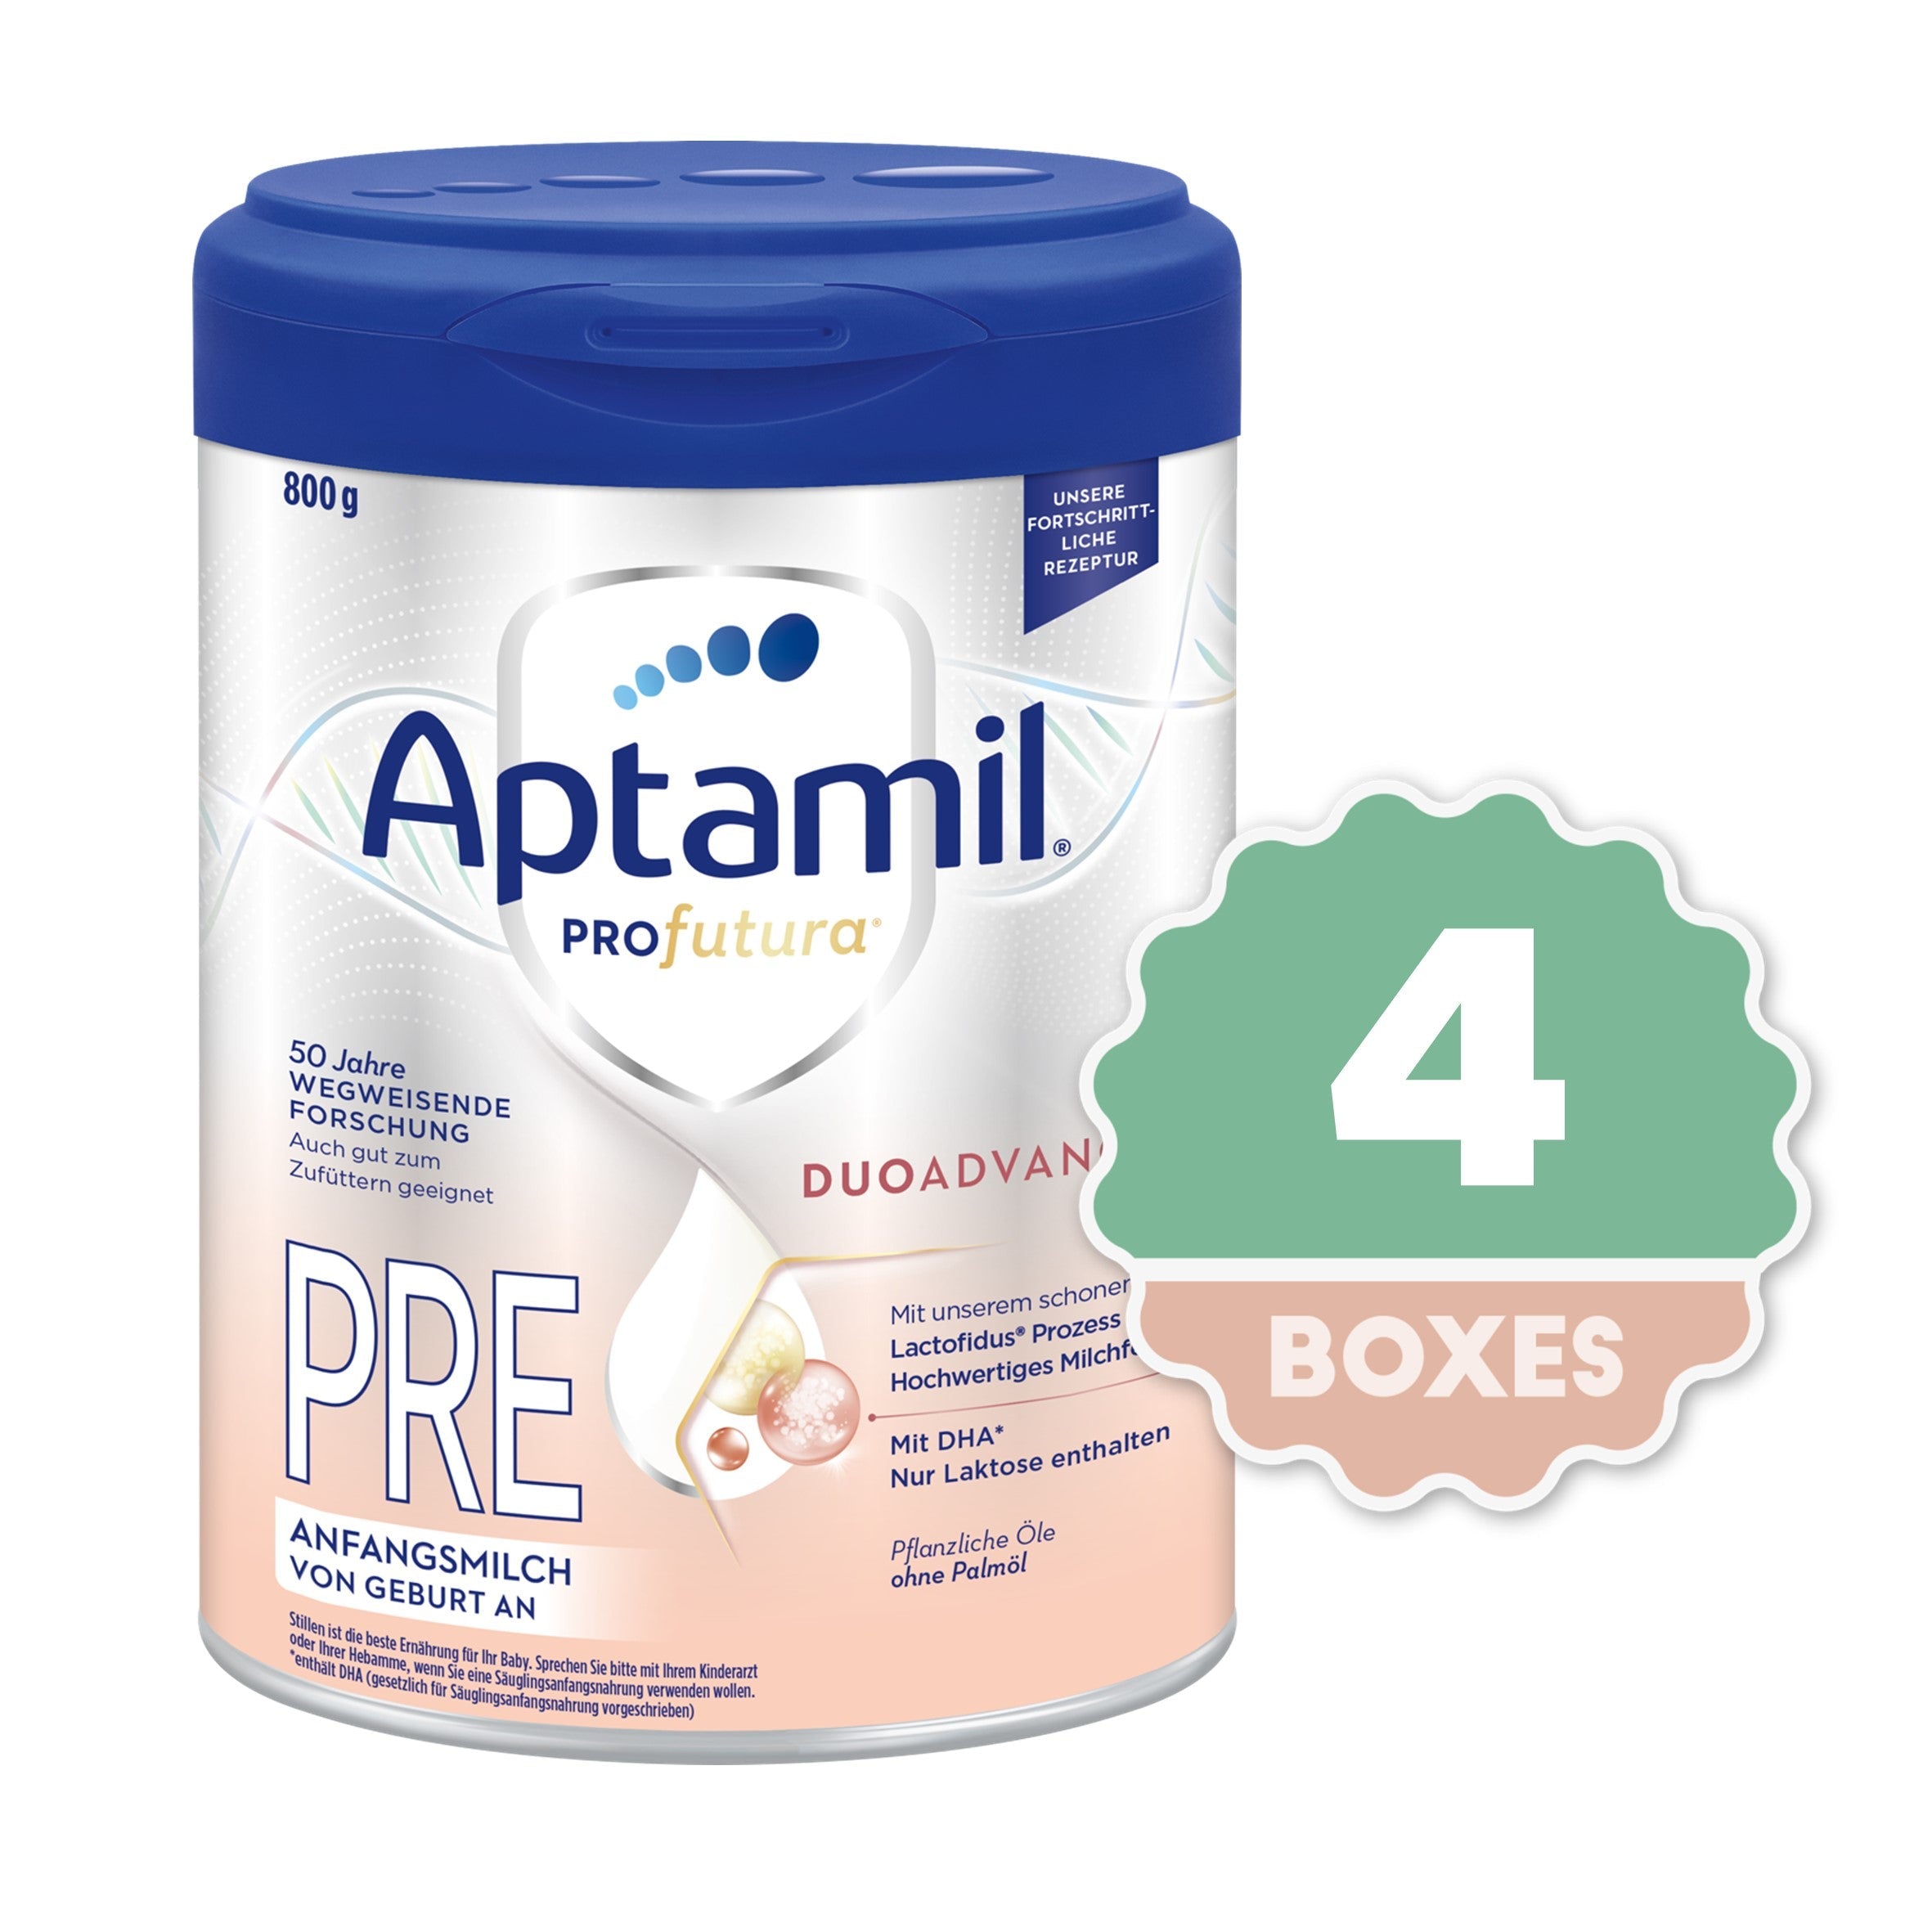 Aptamil Profutura PRE Infant Formula: 800g, 4 Boxes, Buy Now